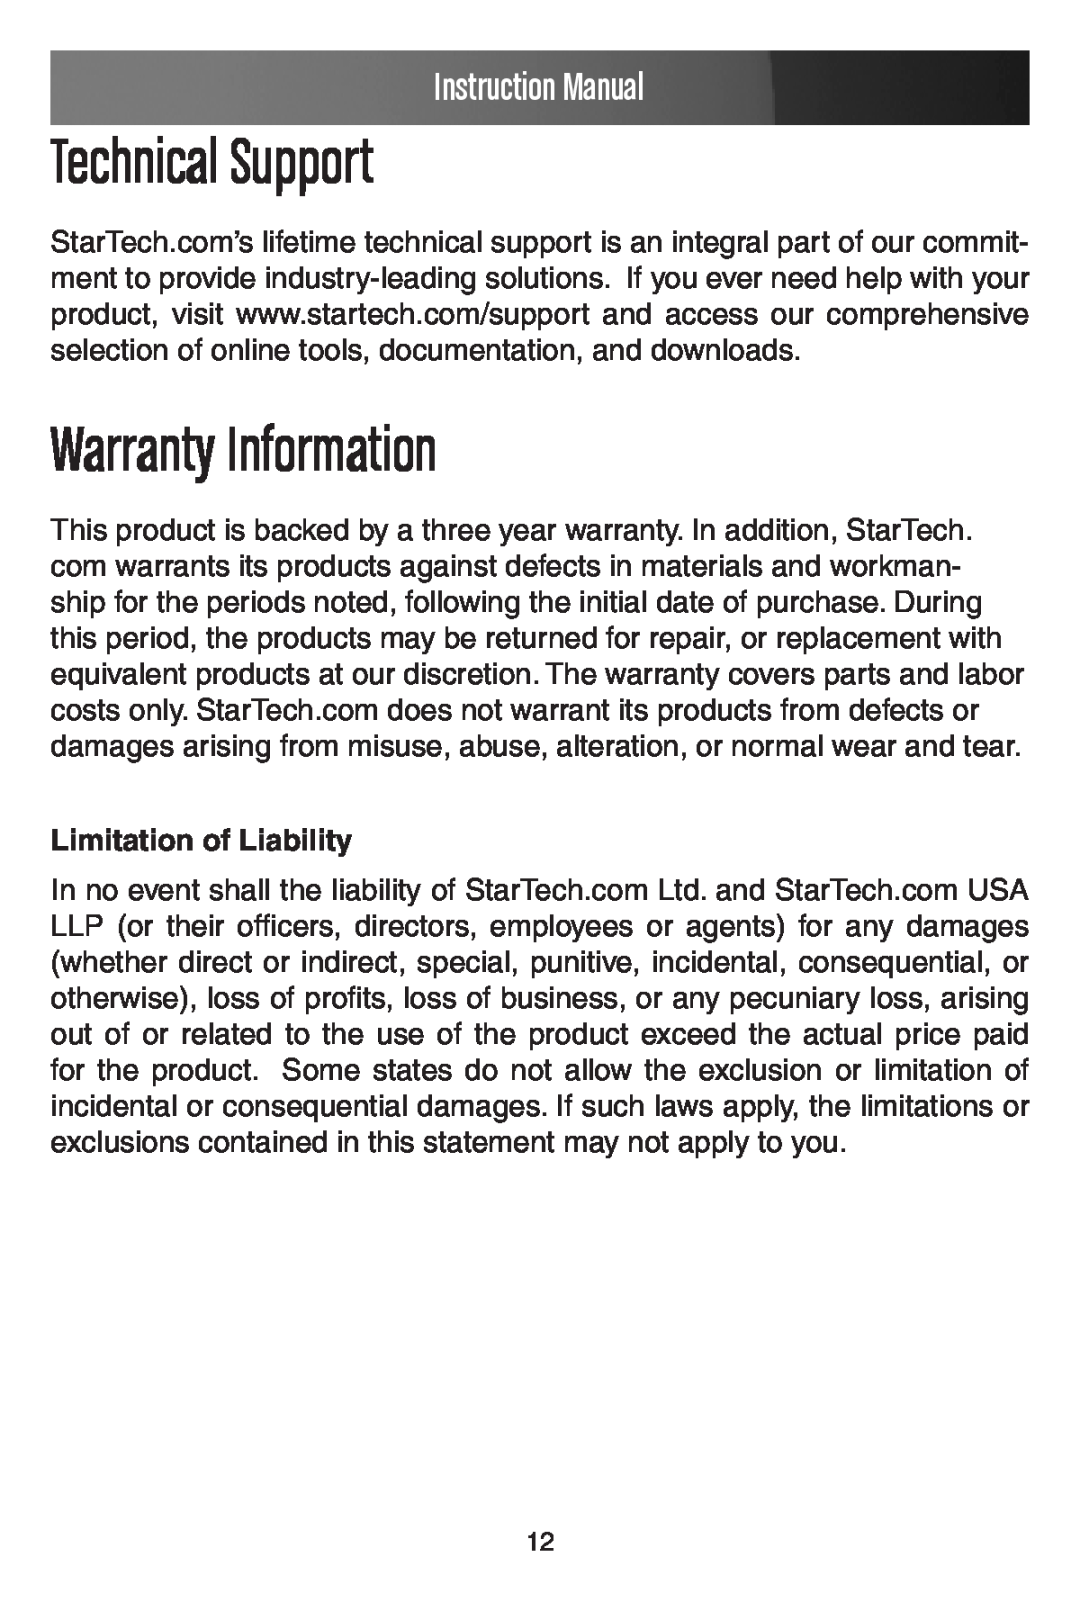 StarTech.com SV431DVIUAHR manual Technical Support, Warranty Information, Limitation of Liability, Instruction Manual 